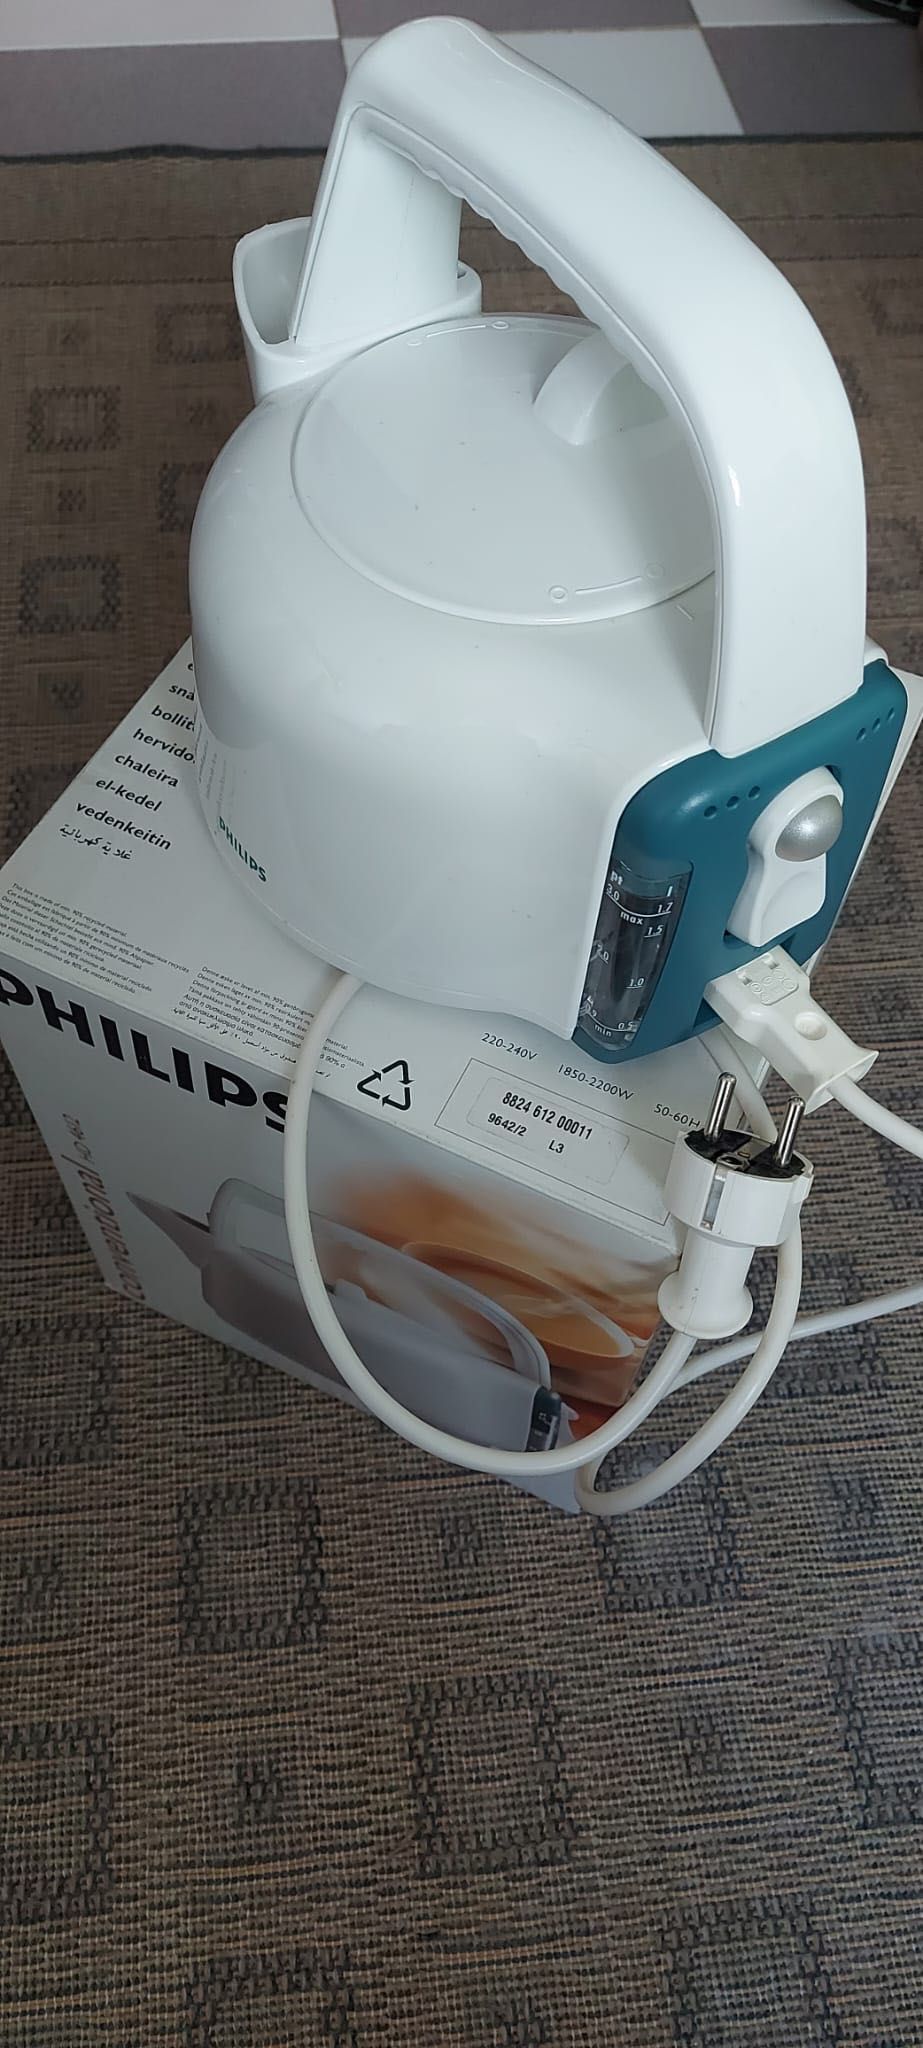 Chaleira Philips / Fervedora de água